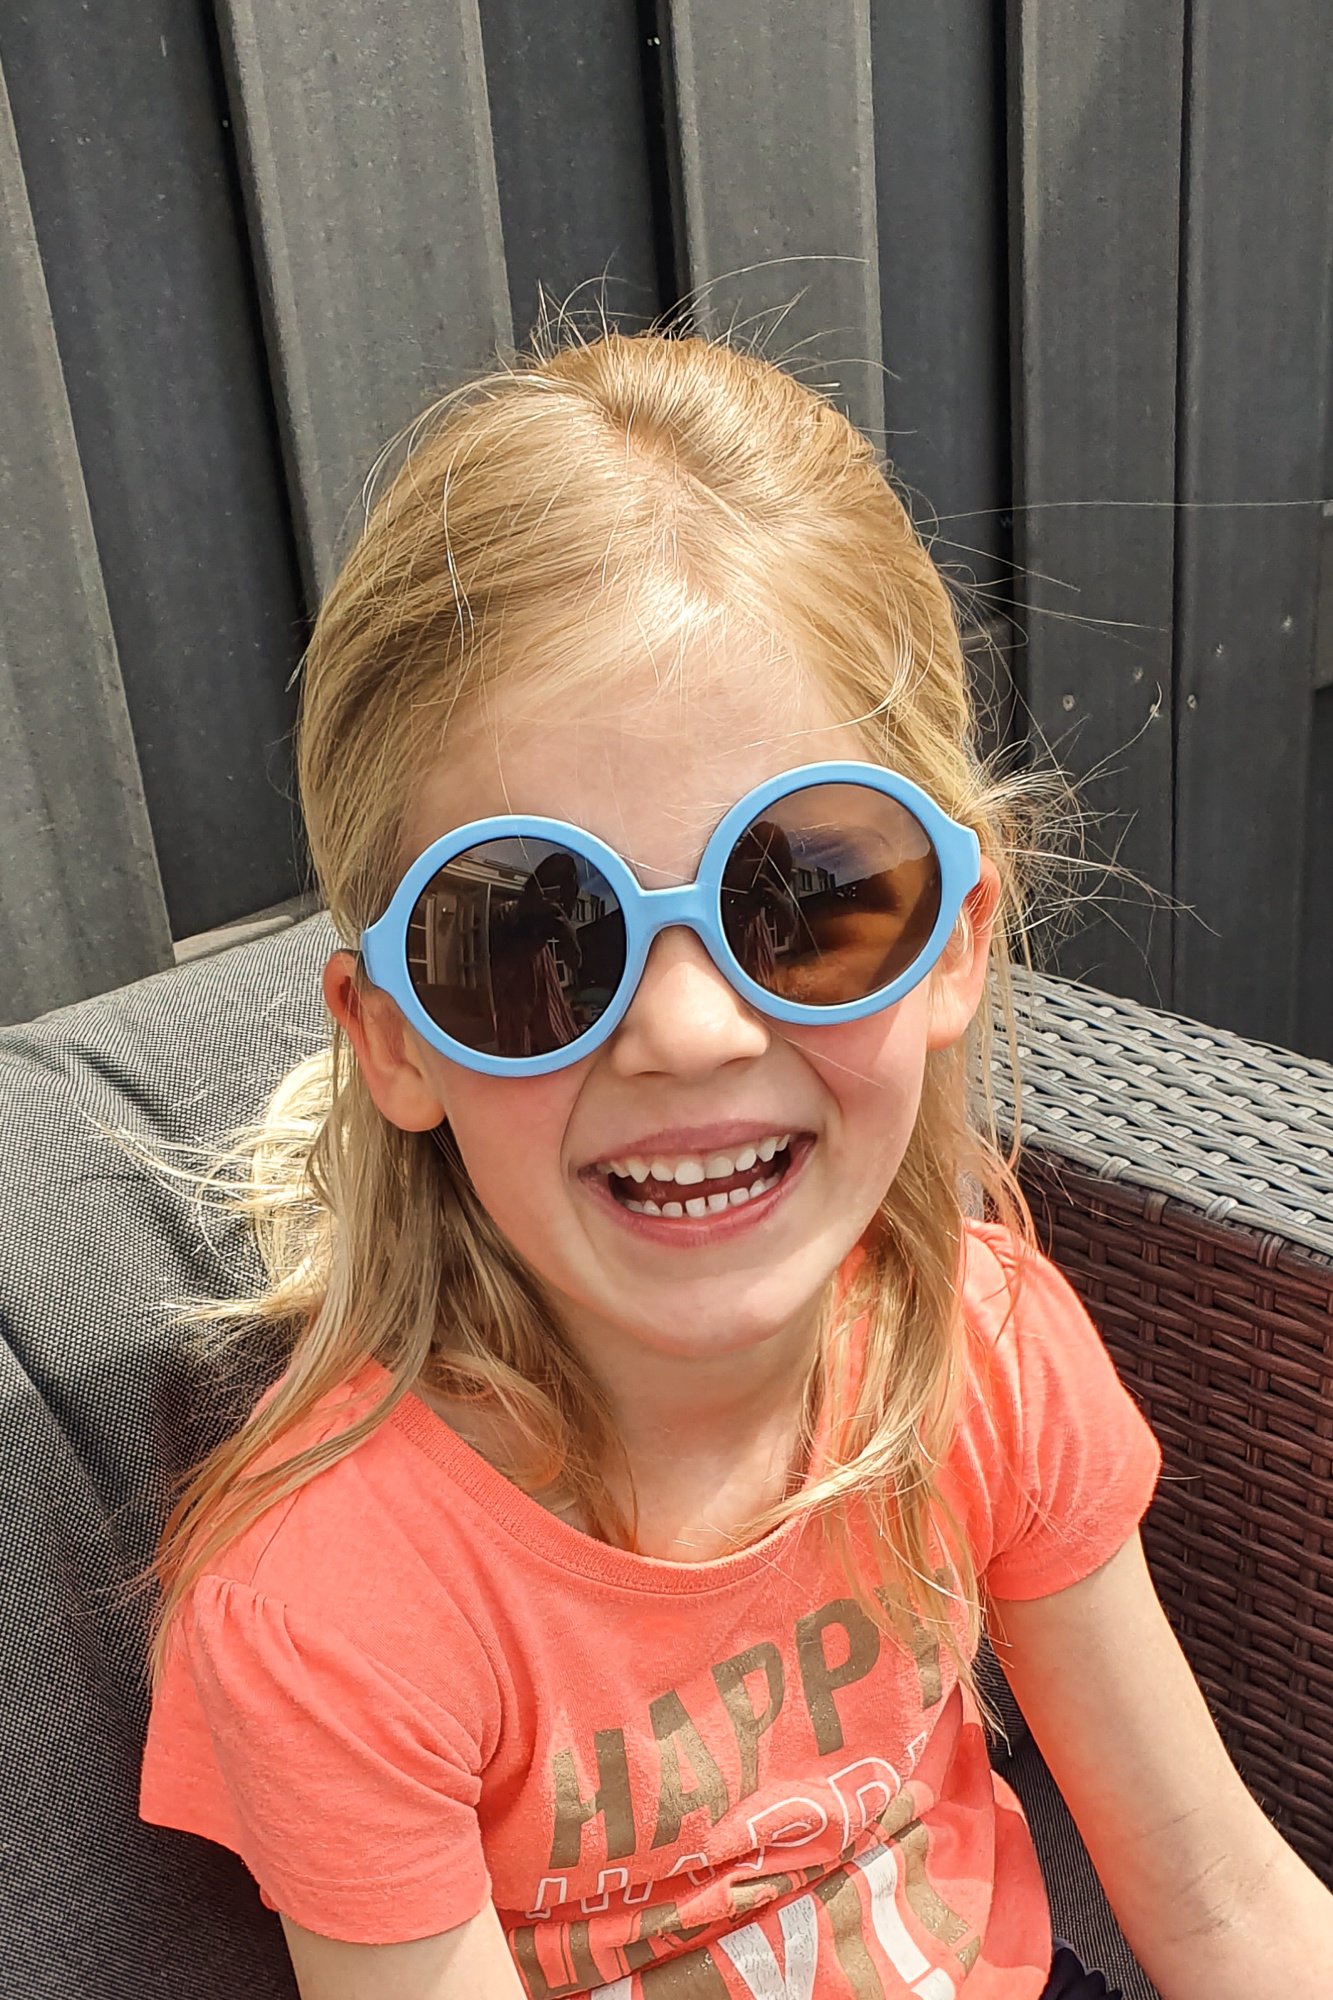 Details more than 138 kids sunglasses size super hot